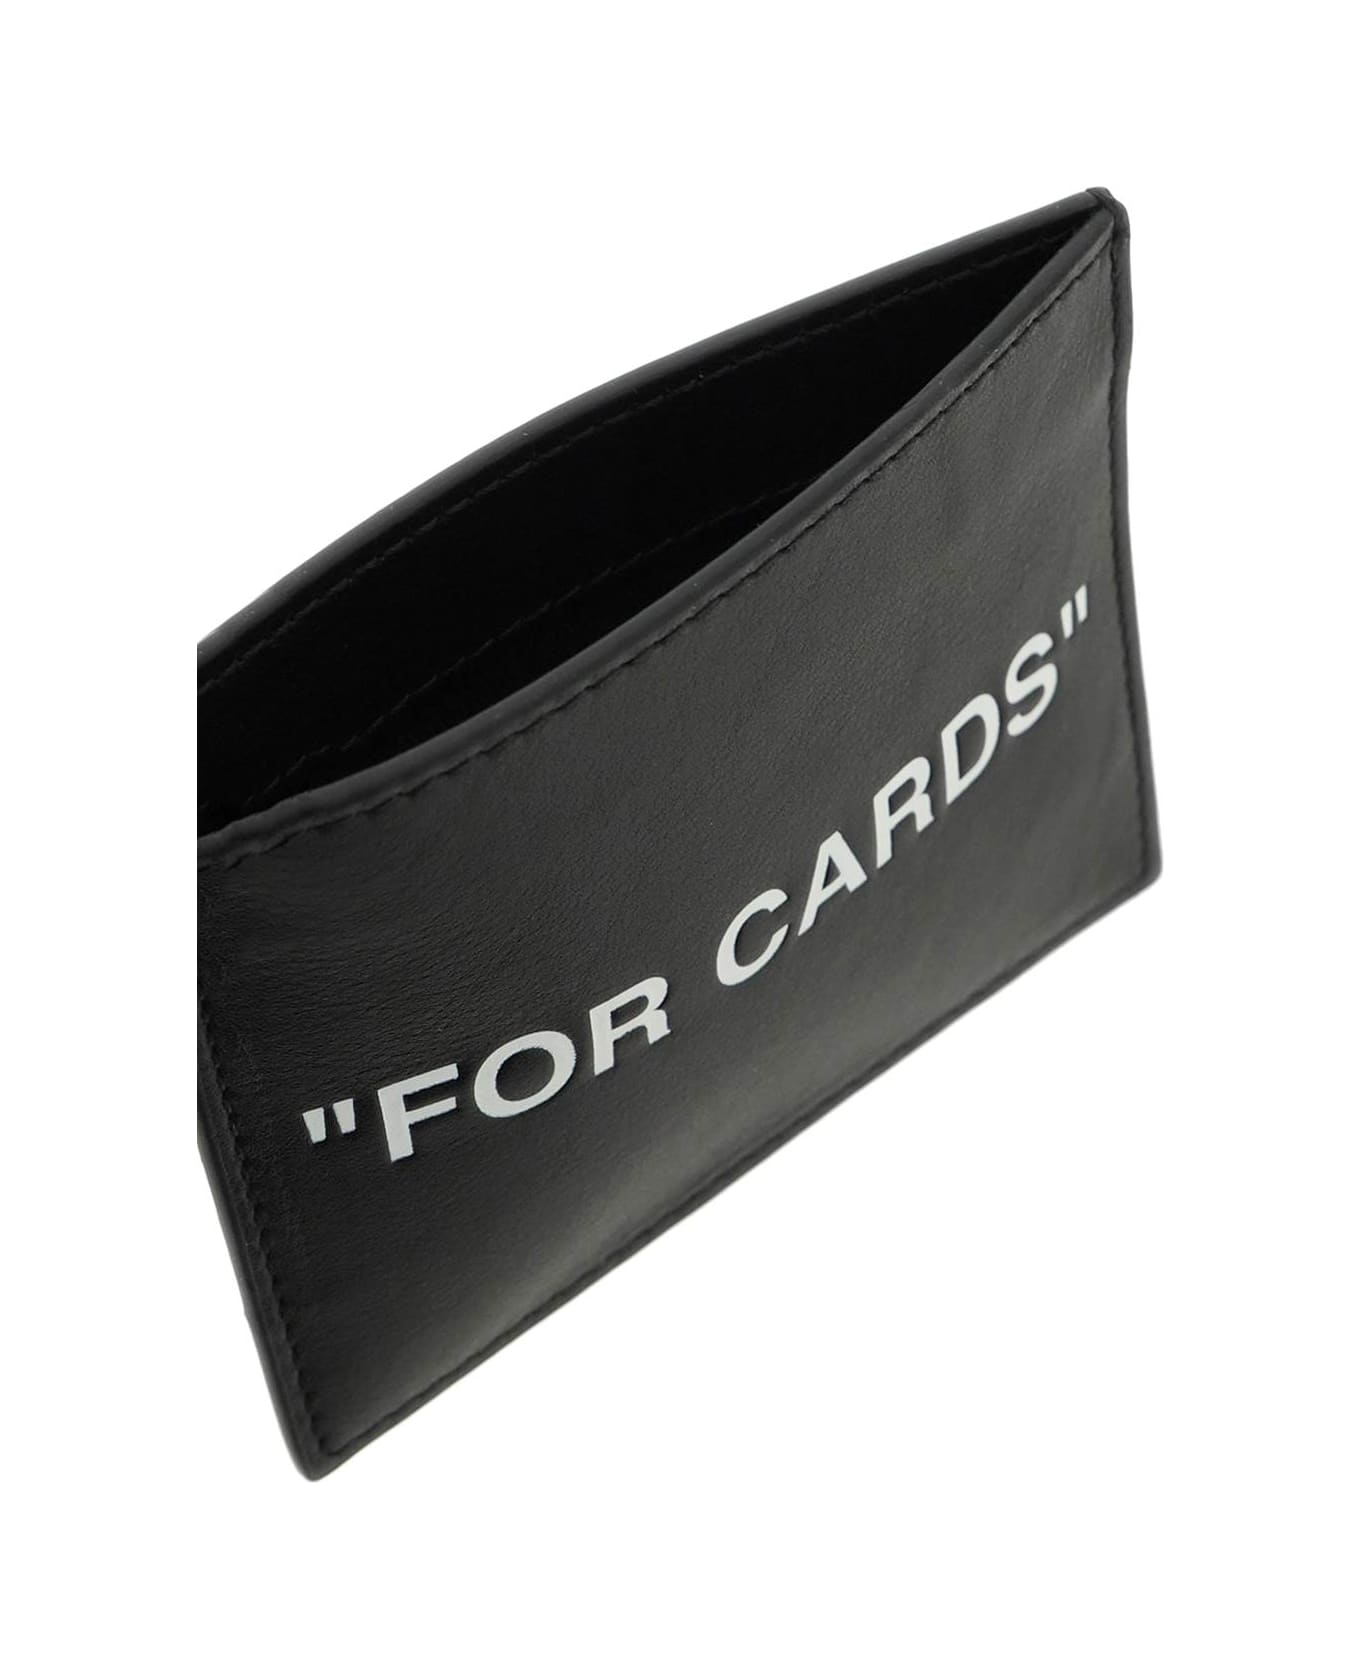 Off-White Leather Cardholder - black